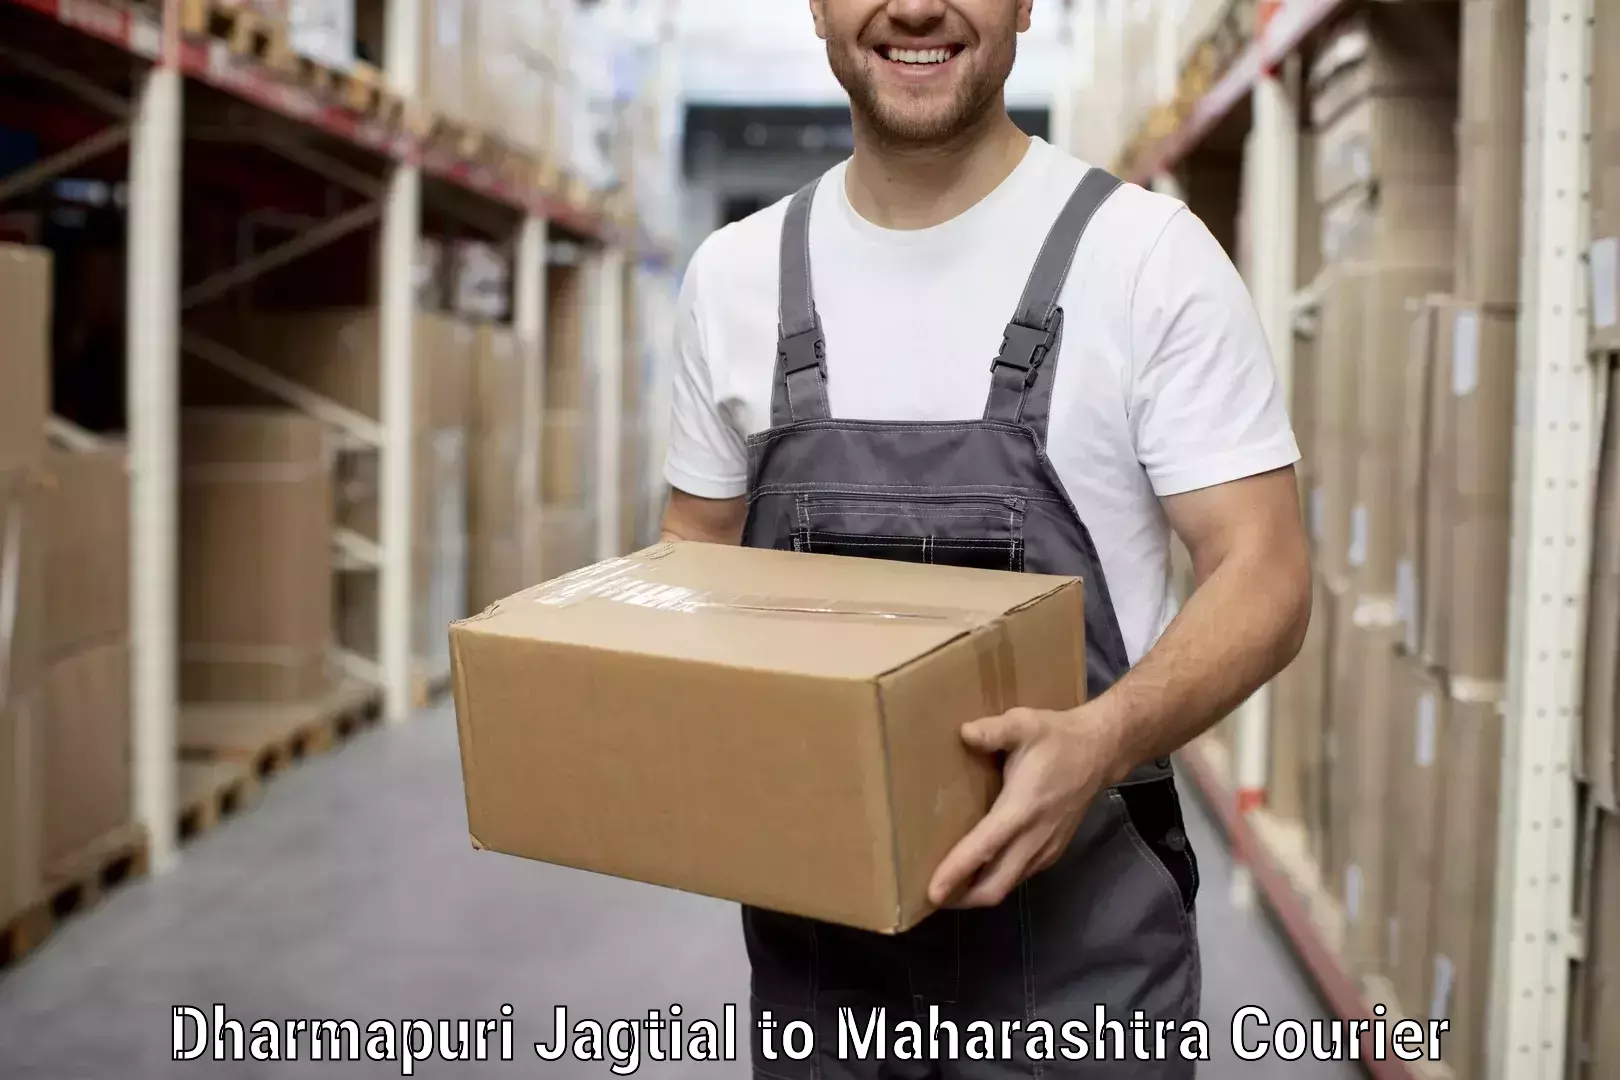 Efficient moving company Dharmapuri Jagtial to Maharashtra